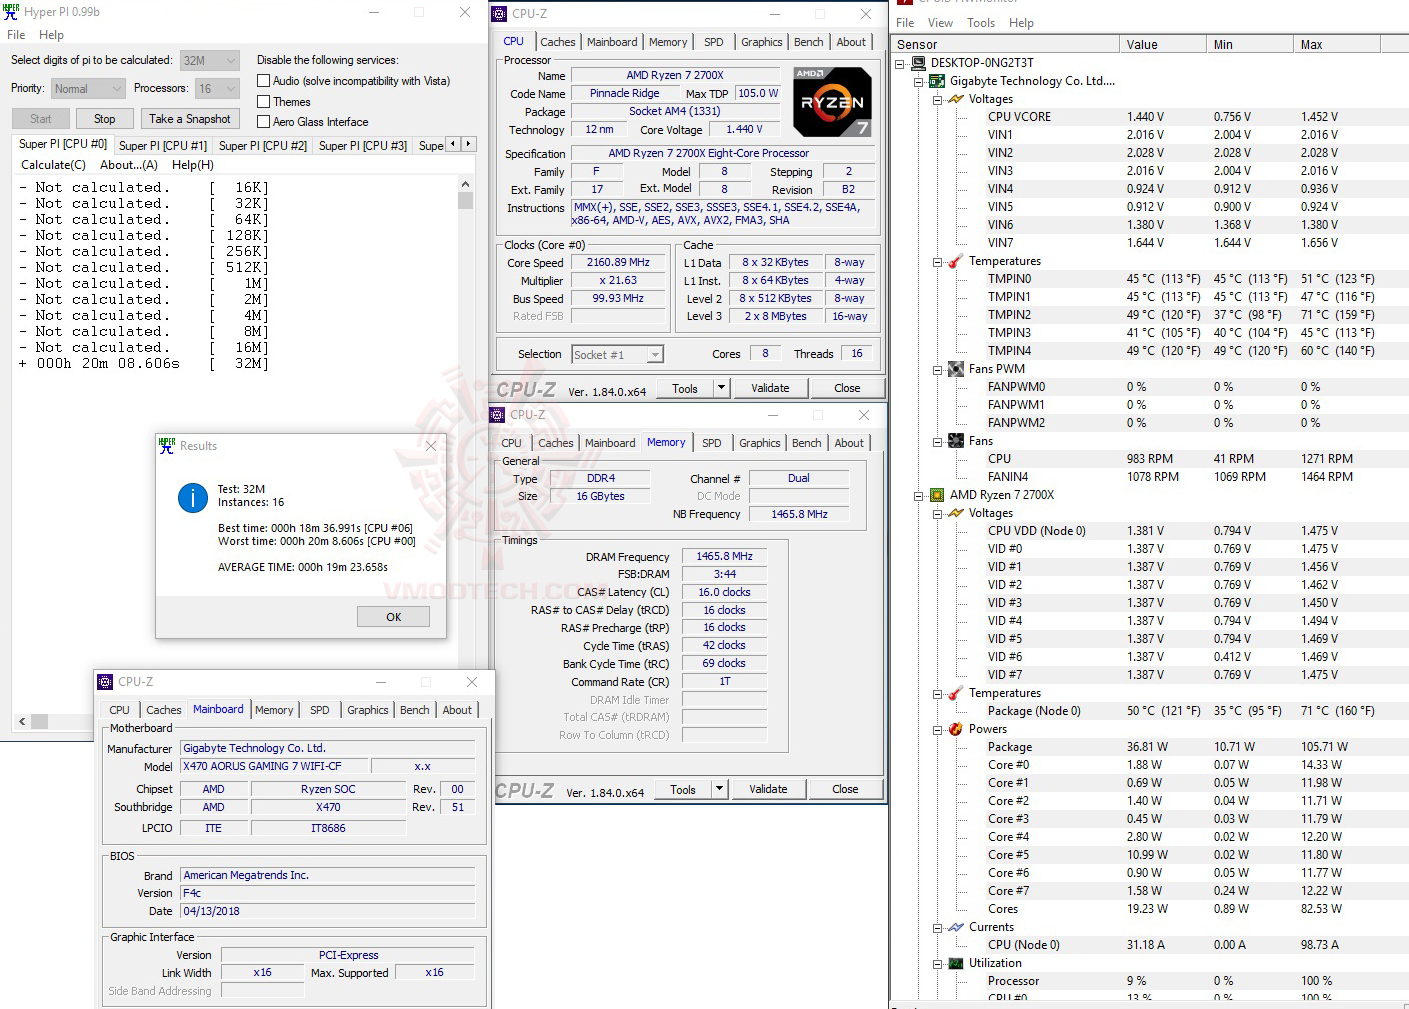 h32 AMD RYZEN 7 2700X PROCESSOR REVIEW